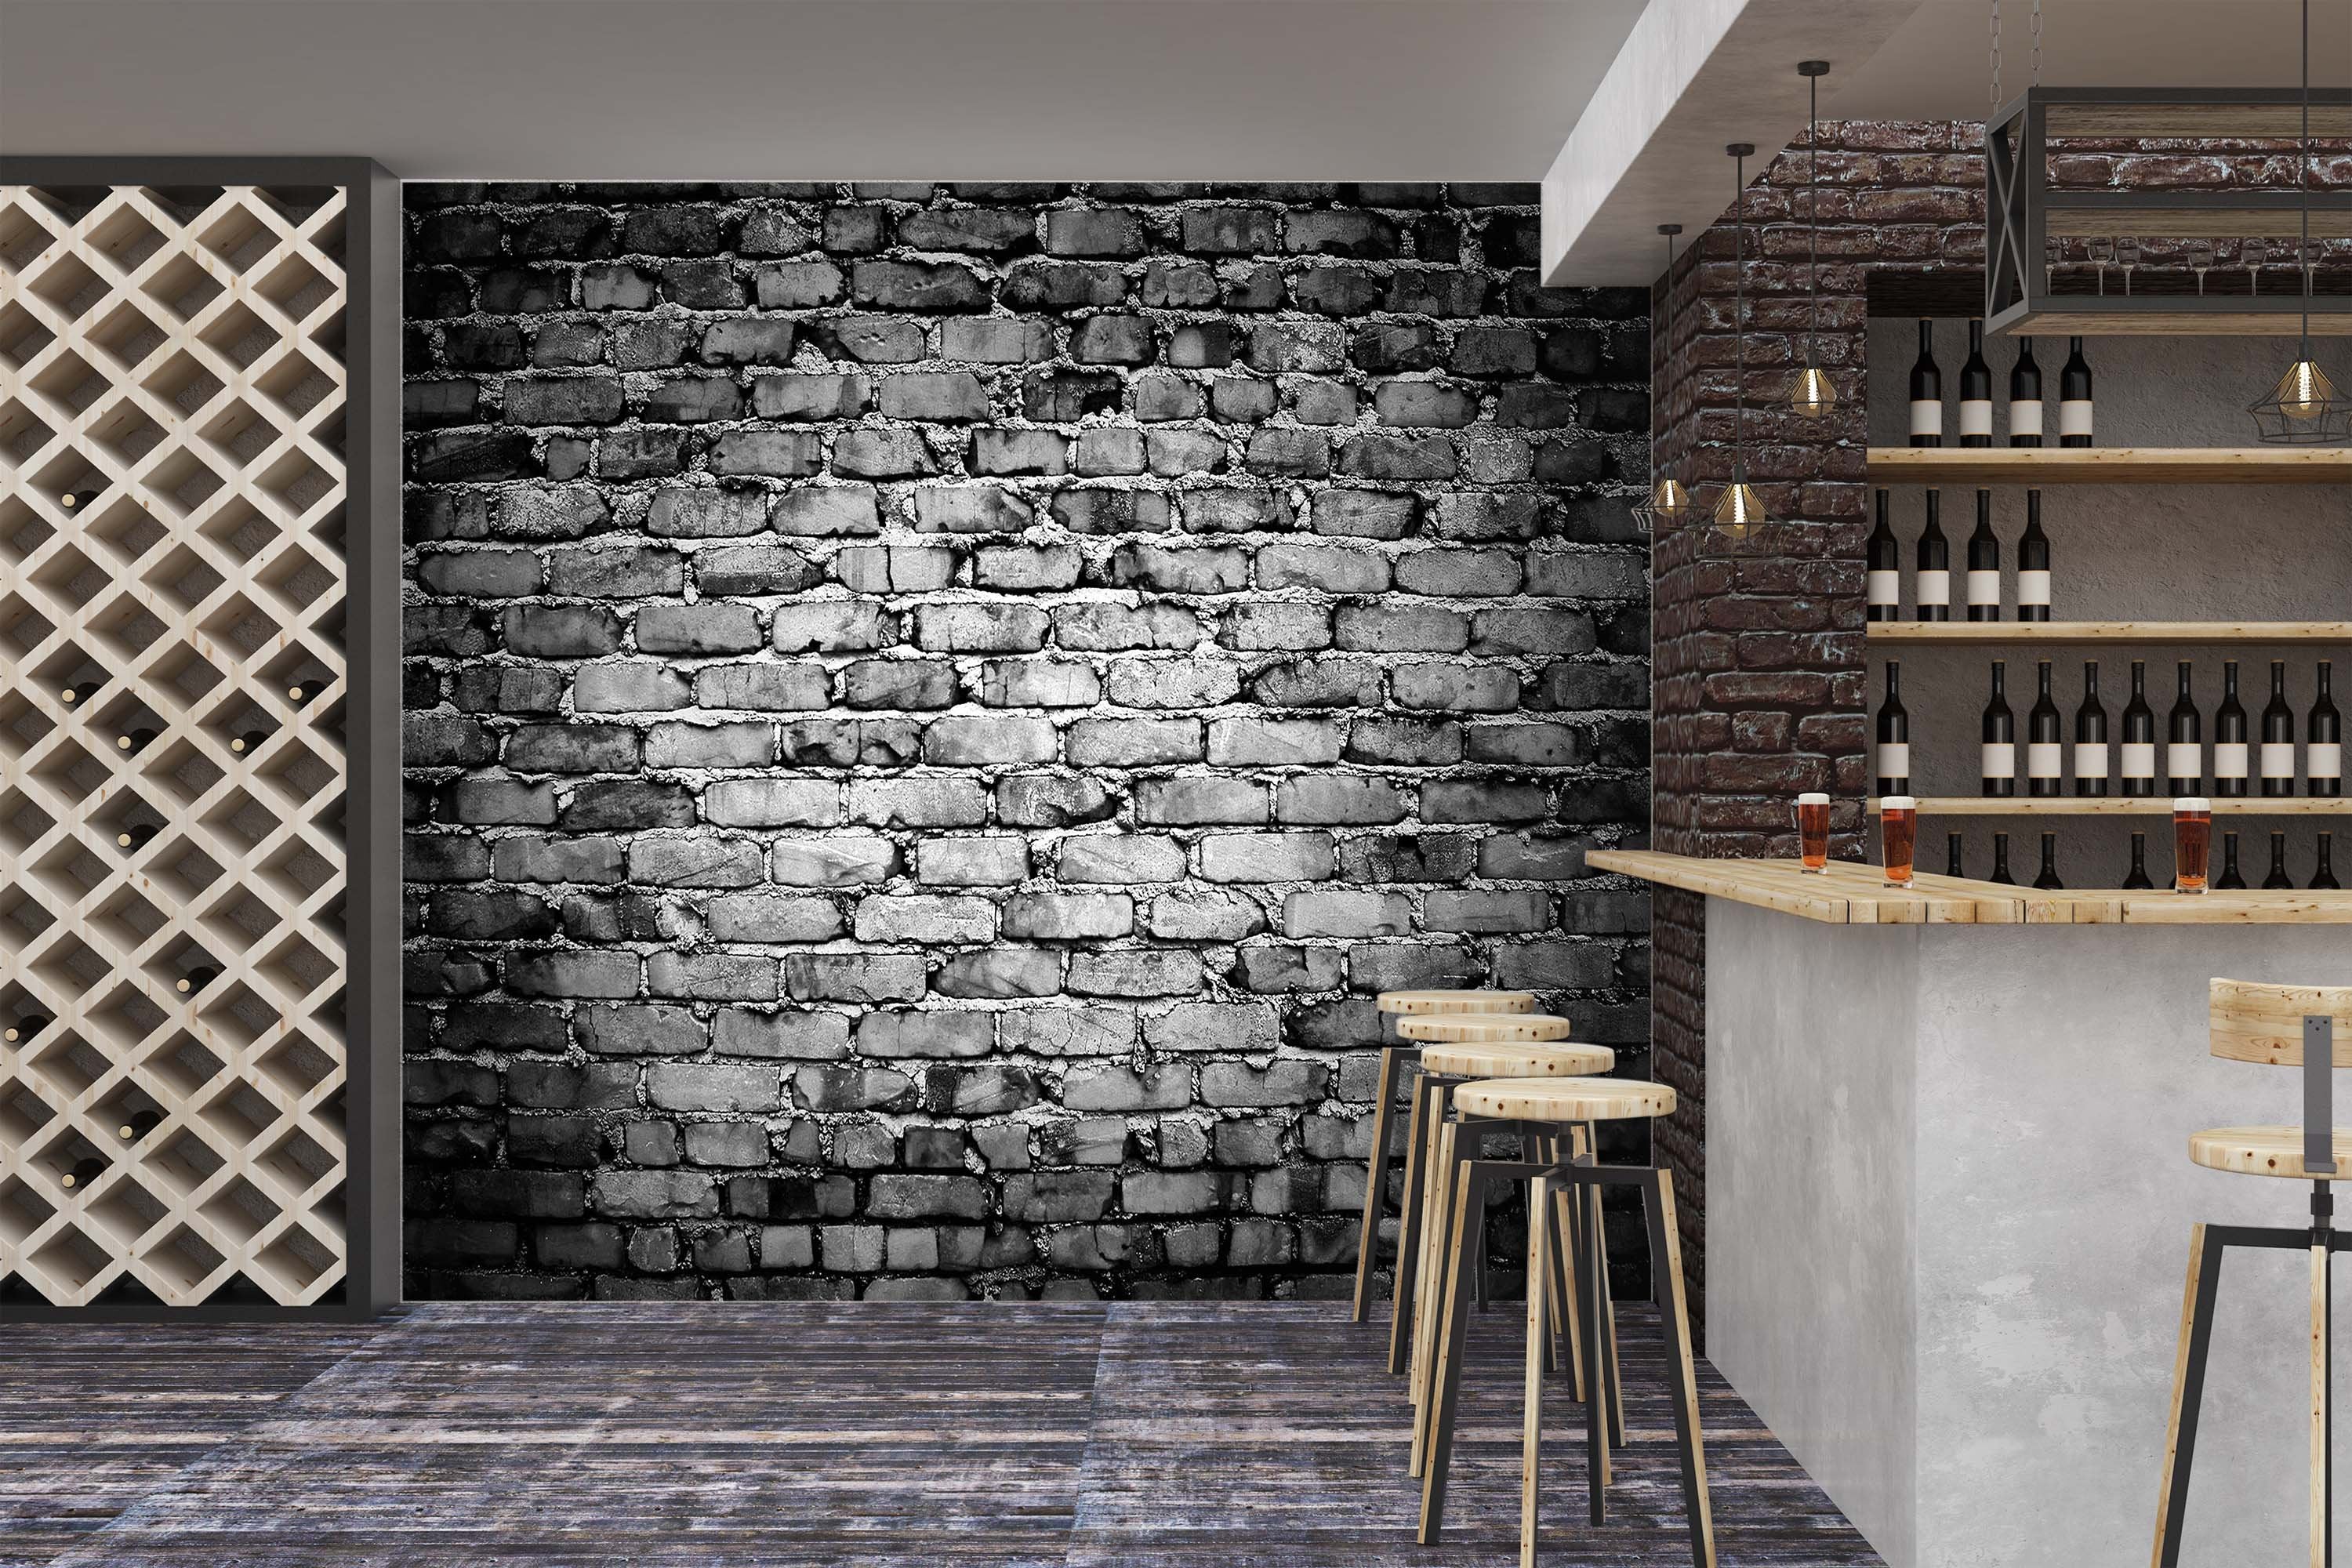 3D Black Bricks 1424 Wall Murals Wallpaper AJ Wallpaper 2 